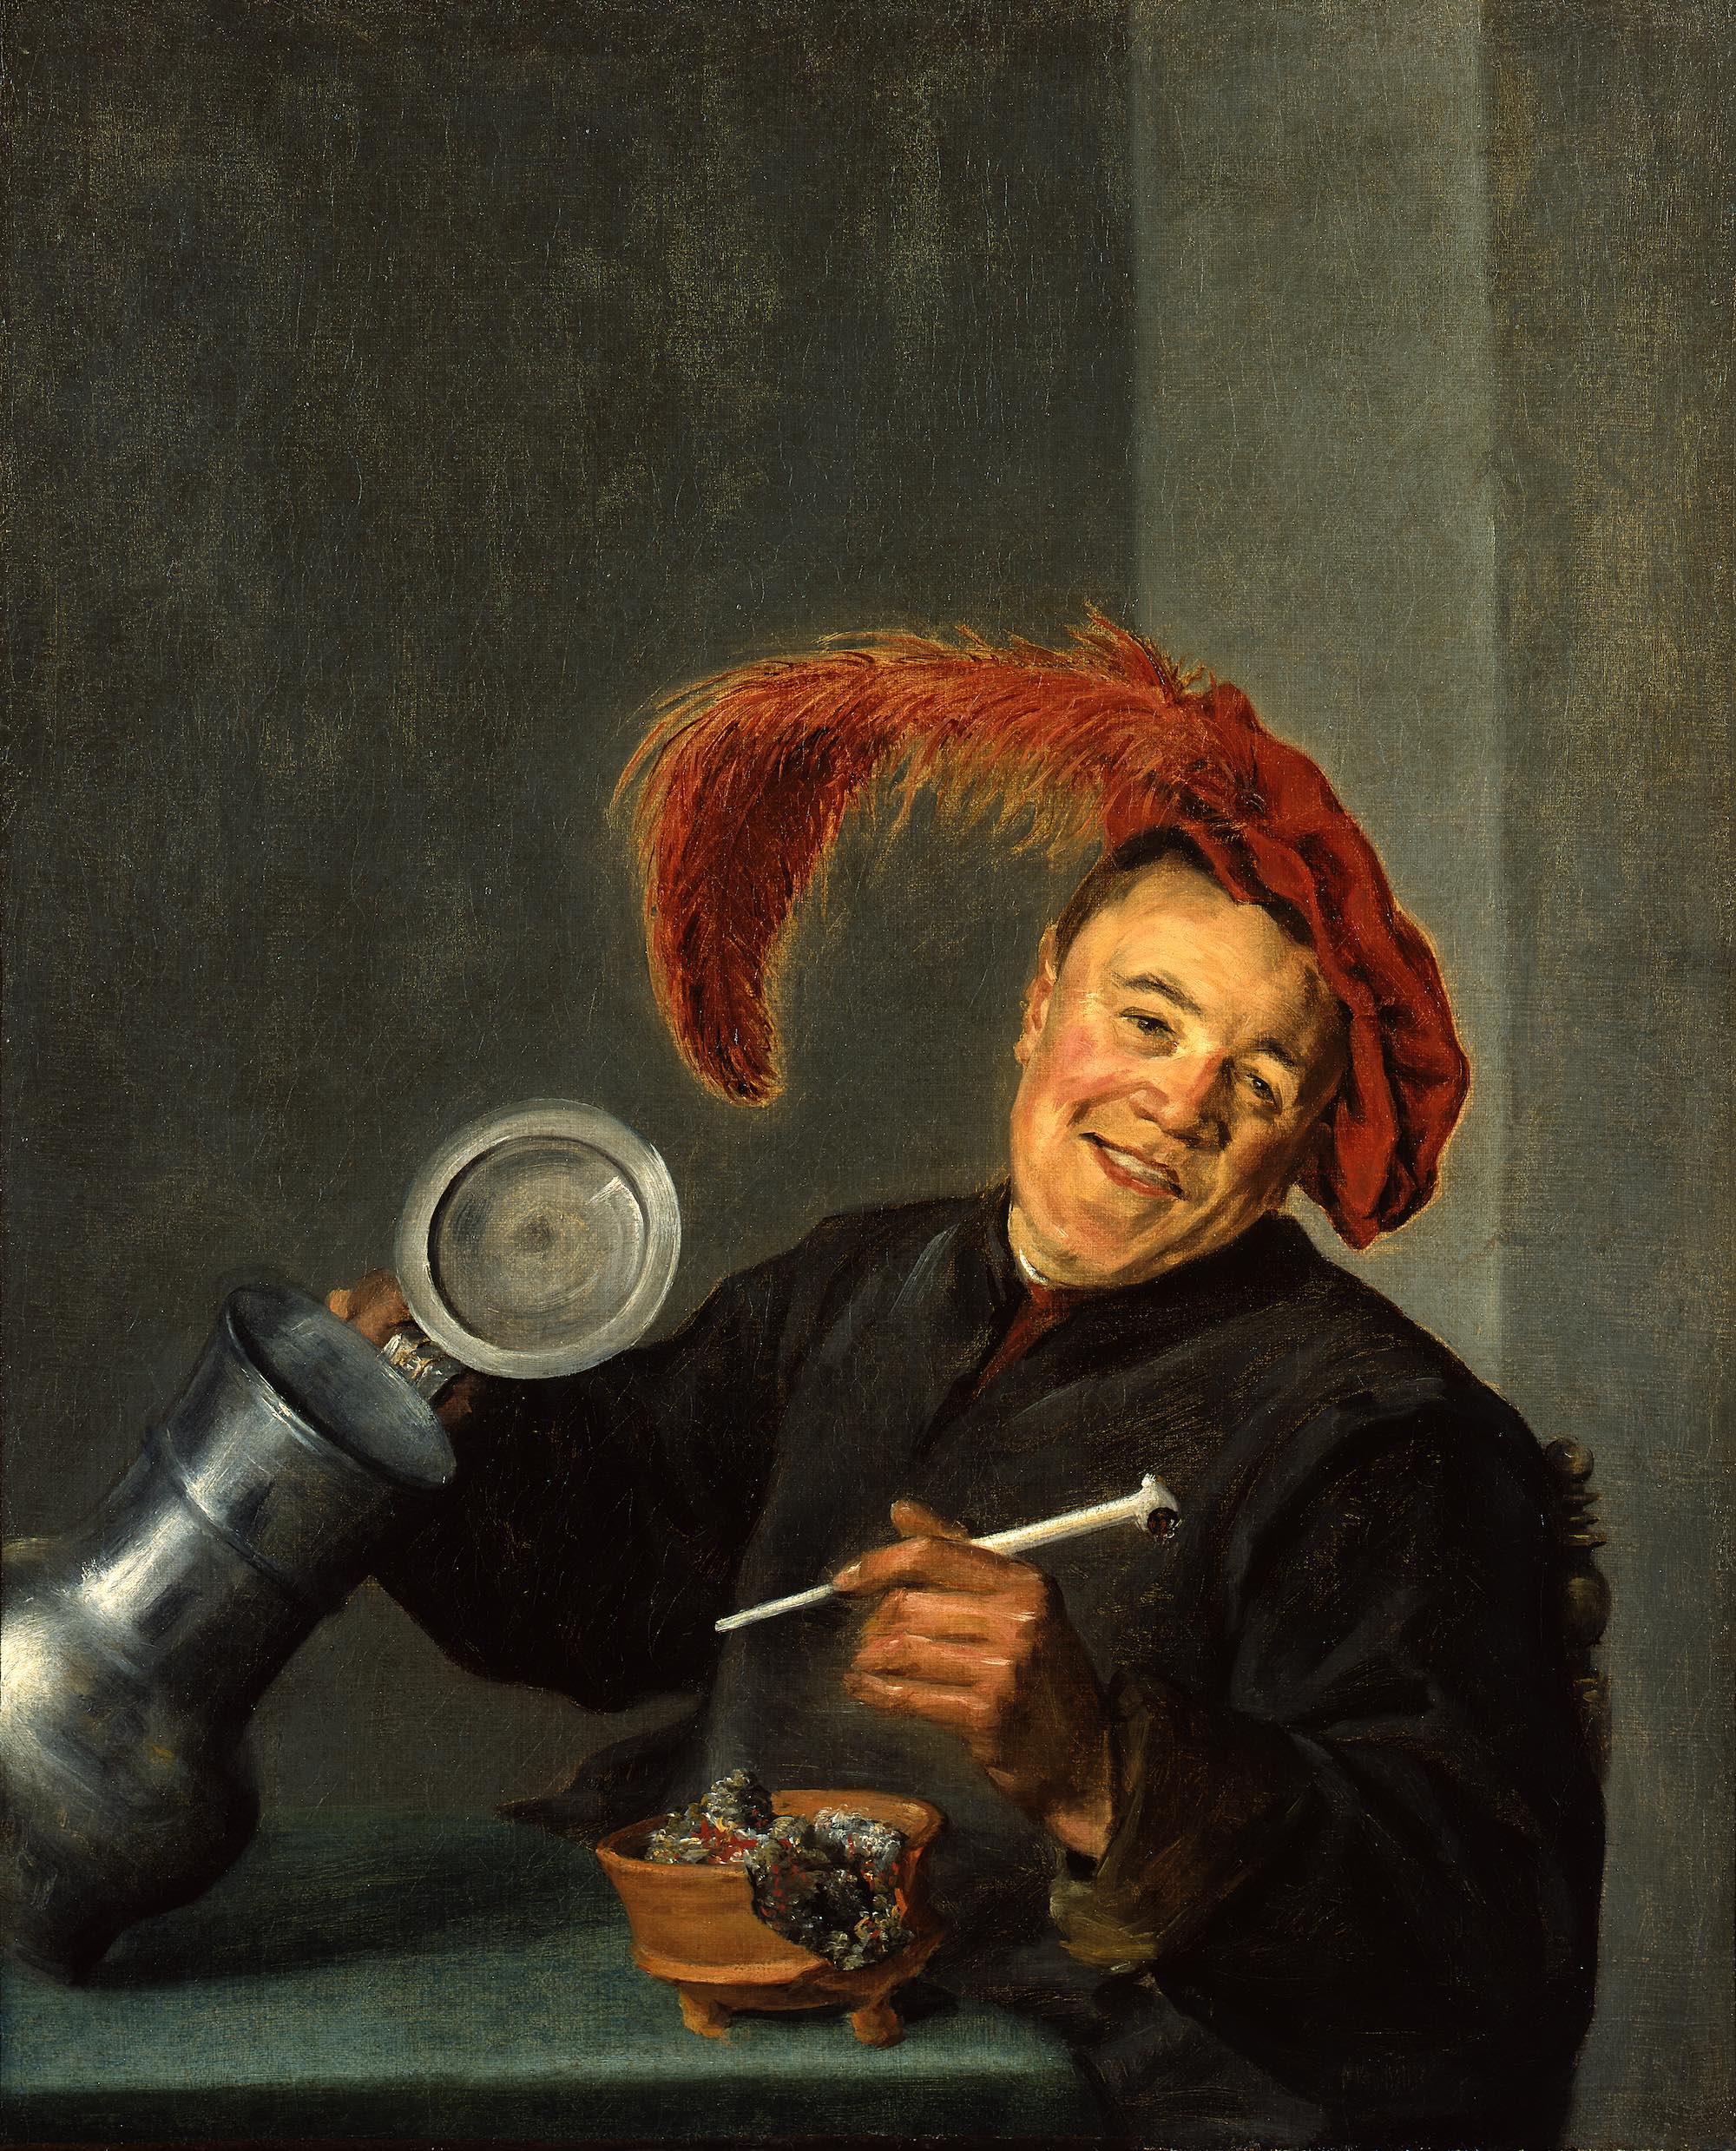 Judith Leyster (1609-1660), Le joyeux buveur, vers 1630. Huile sur toile, 77 x 63 cm. Berlin, Staatliche Museen zu Berlin, Gemäldegalerie. Photo service de presse. © Jörg P. Anders